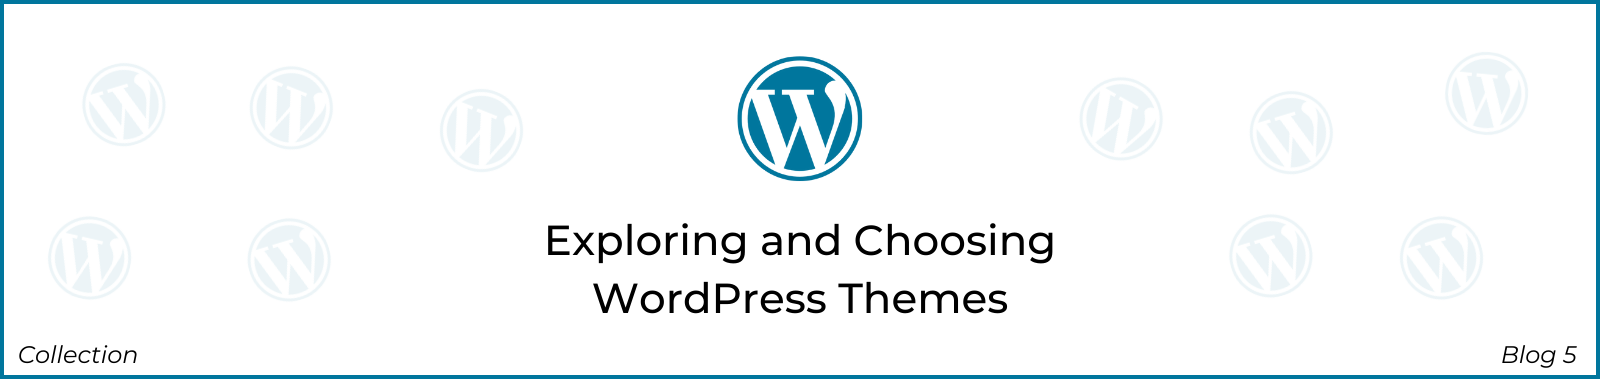 Exploring and Choosing WordPress Themes